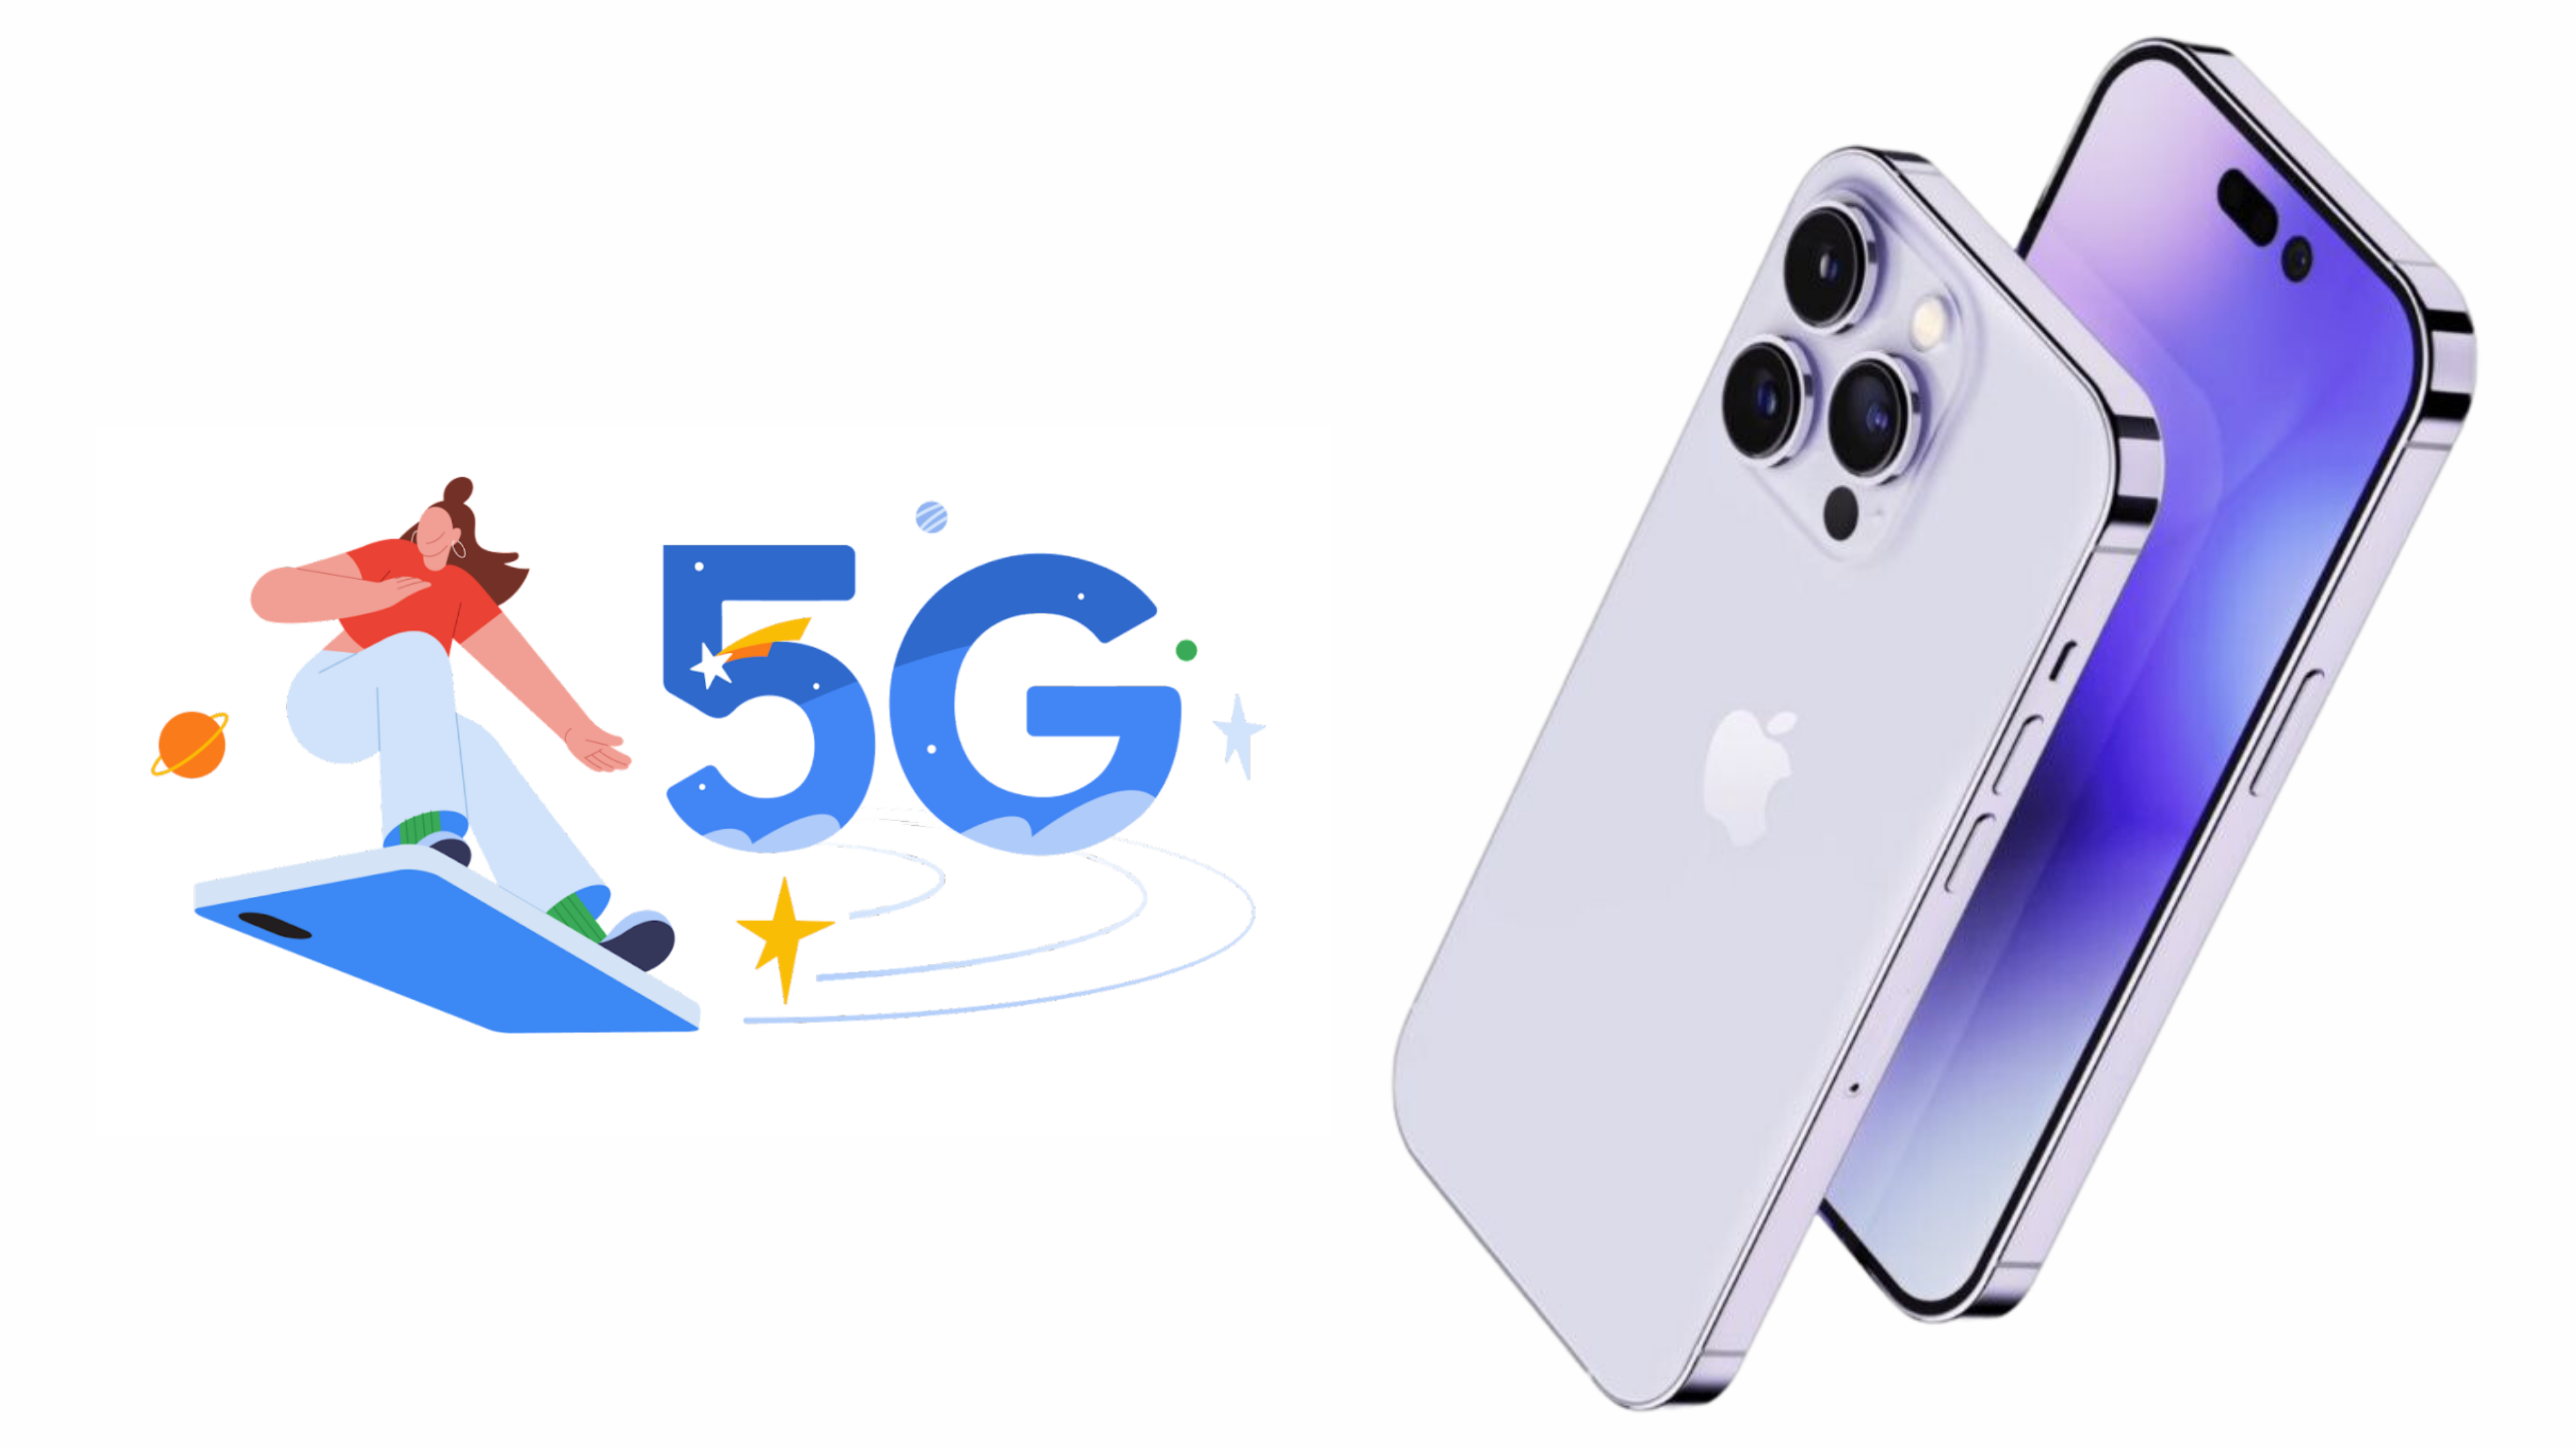 iPhone with 5G Google Fi logo